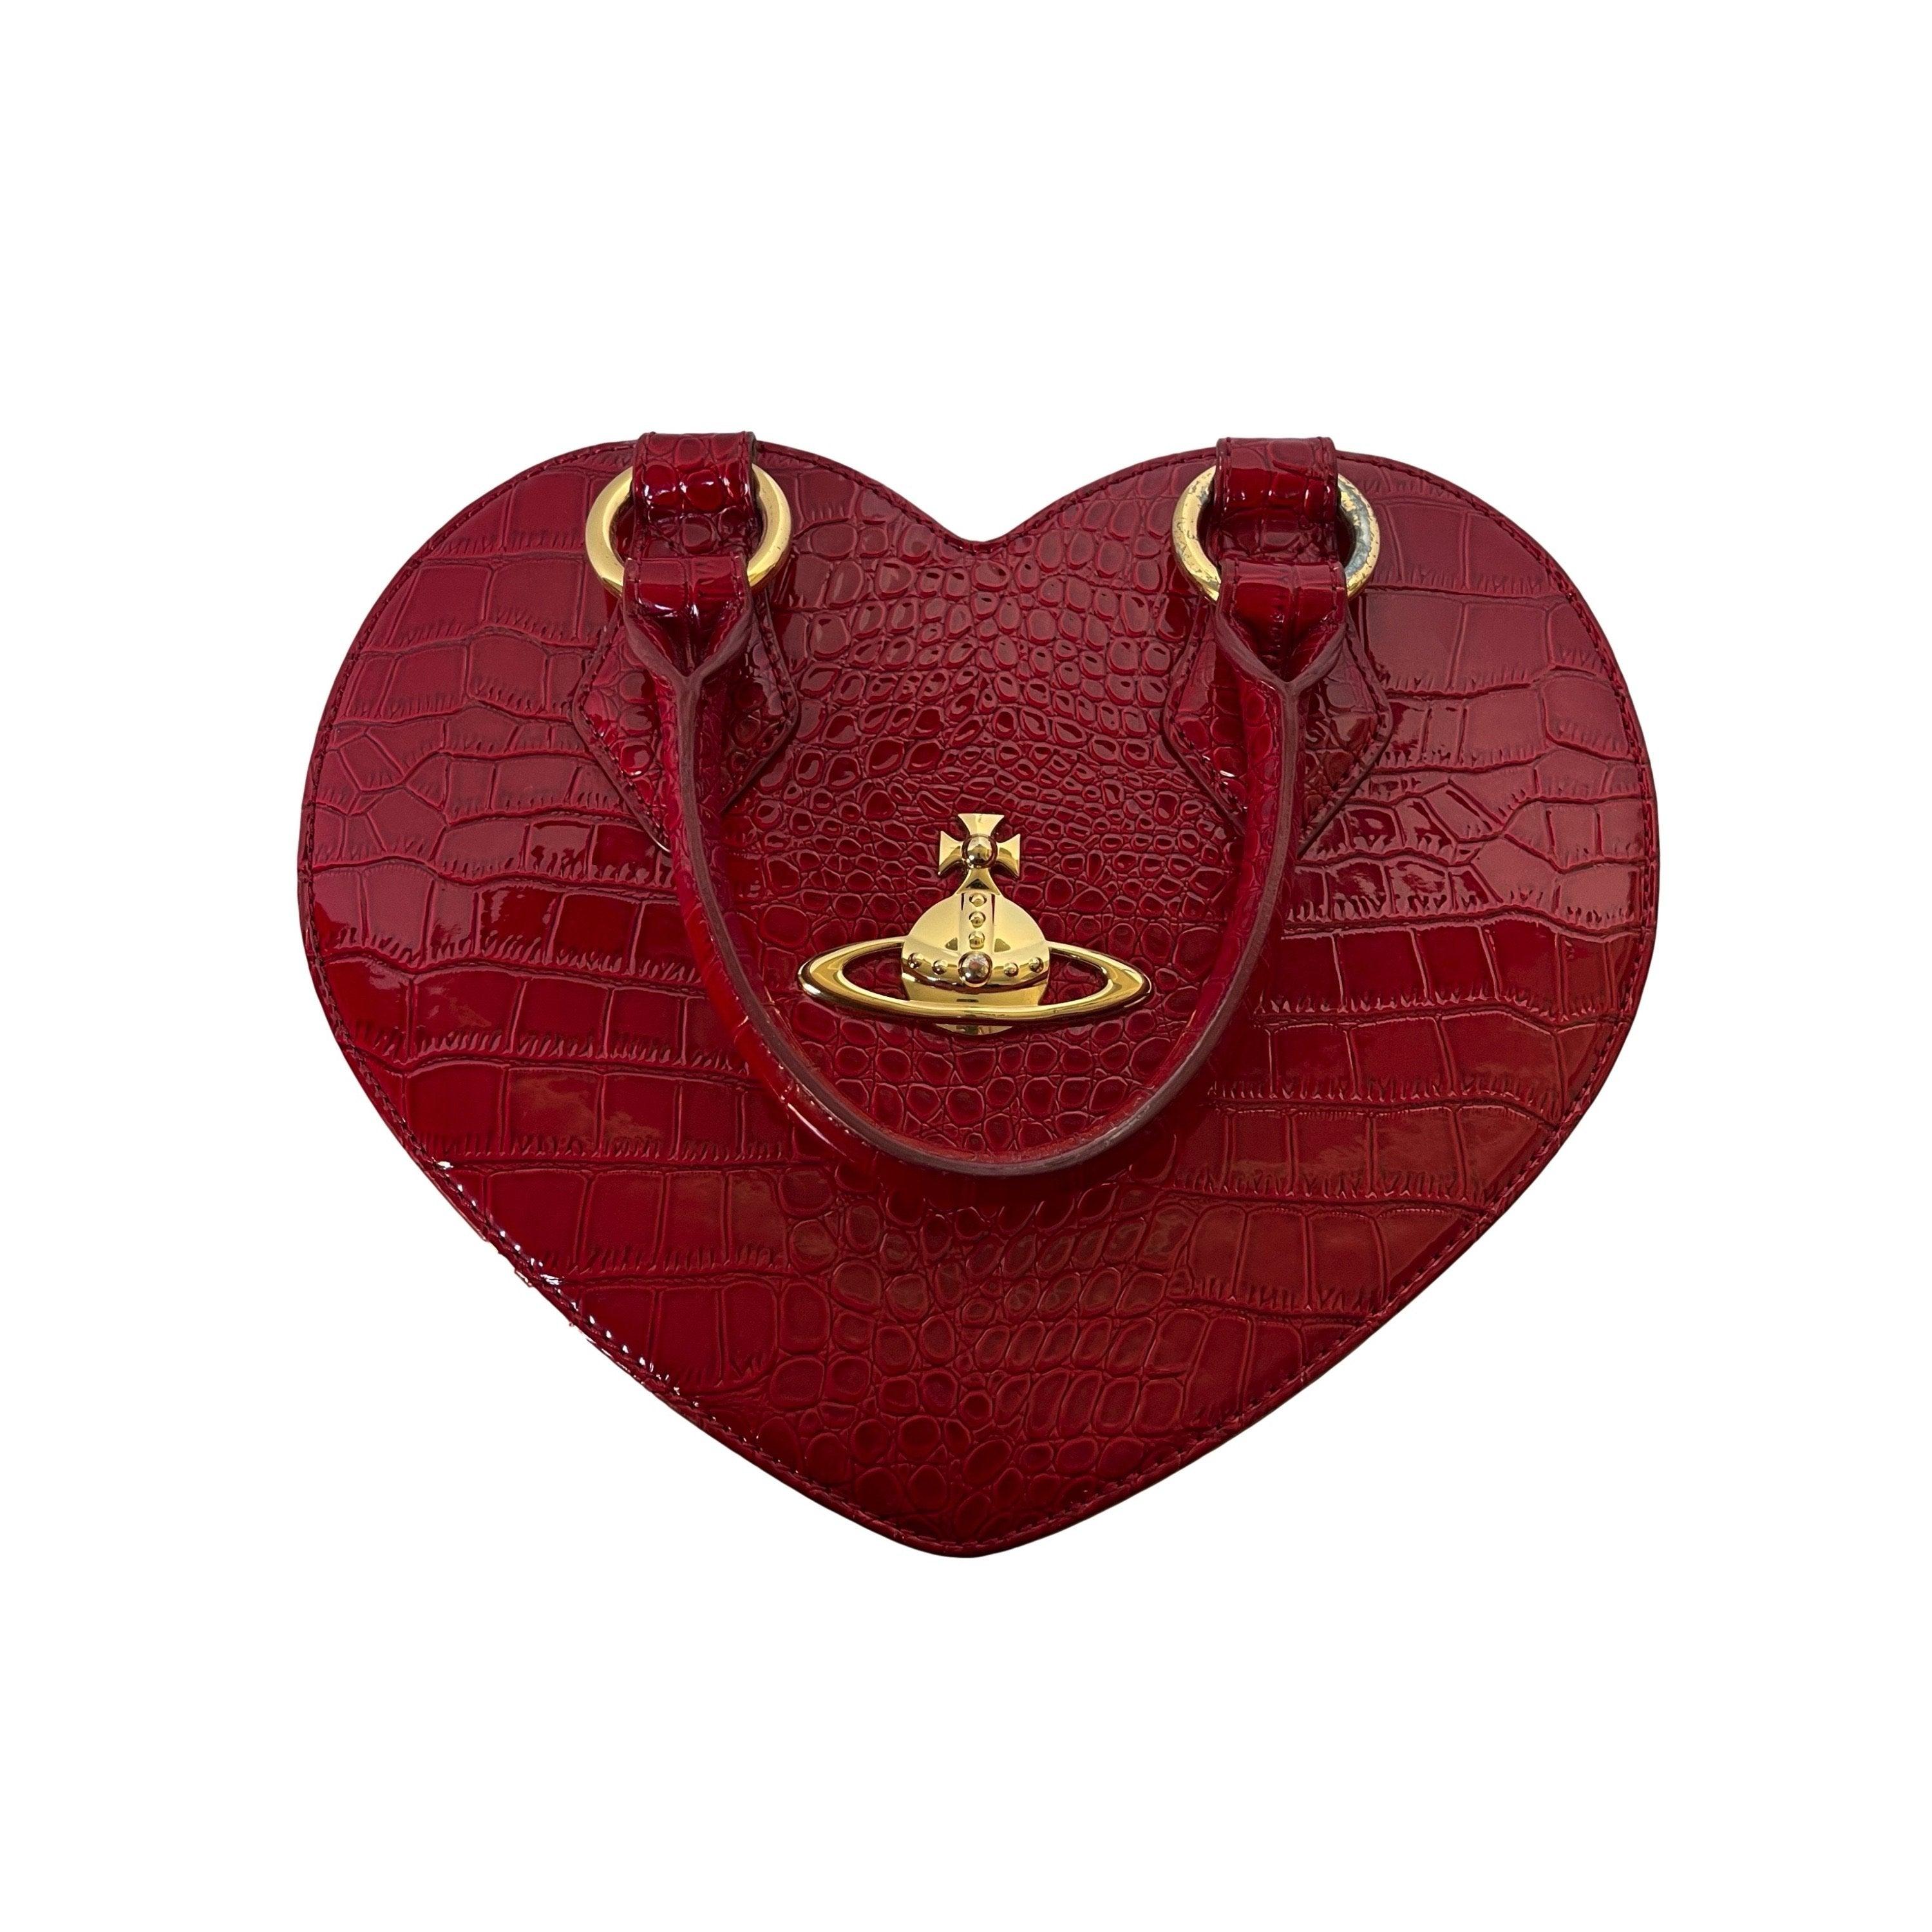 Vivienne Westwood 61vv169 croc-embossed red enameled leather heart